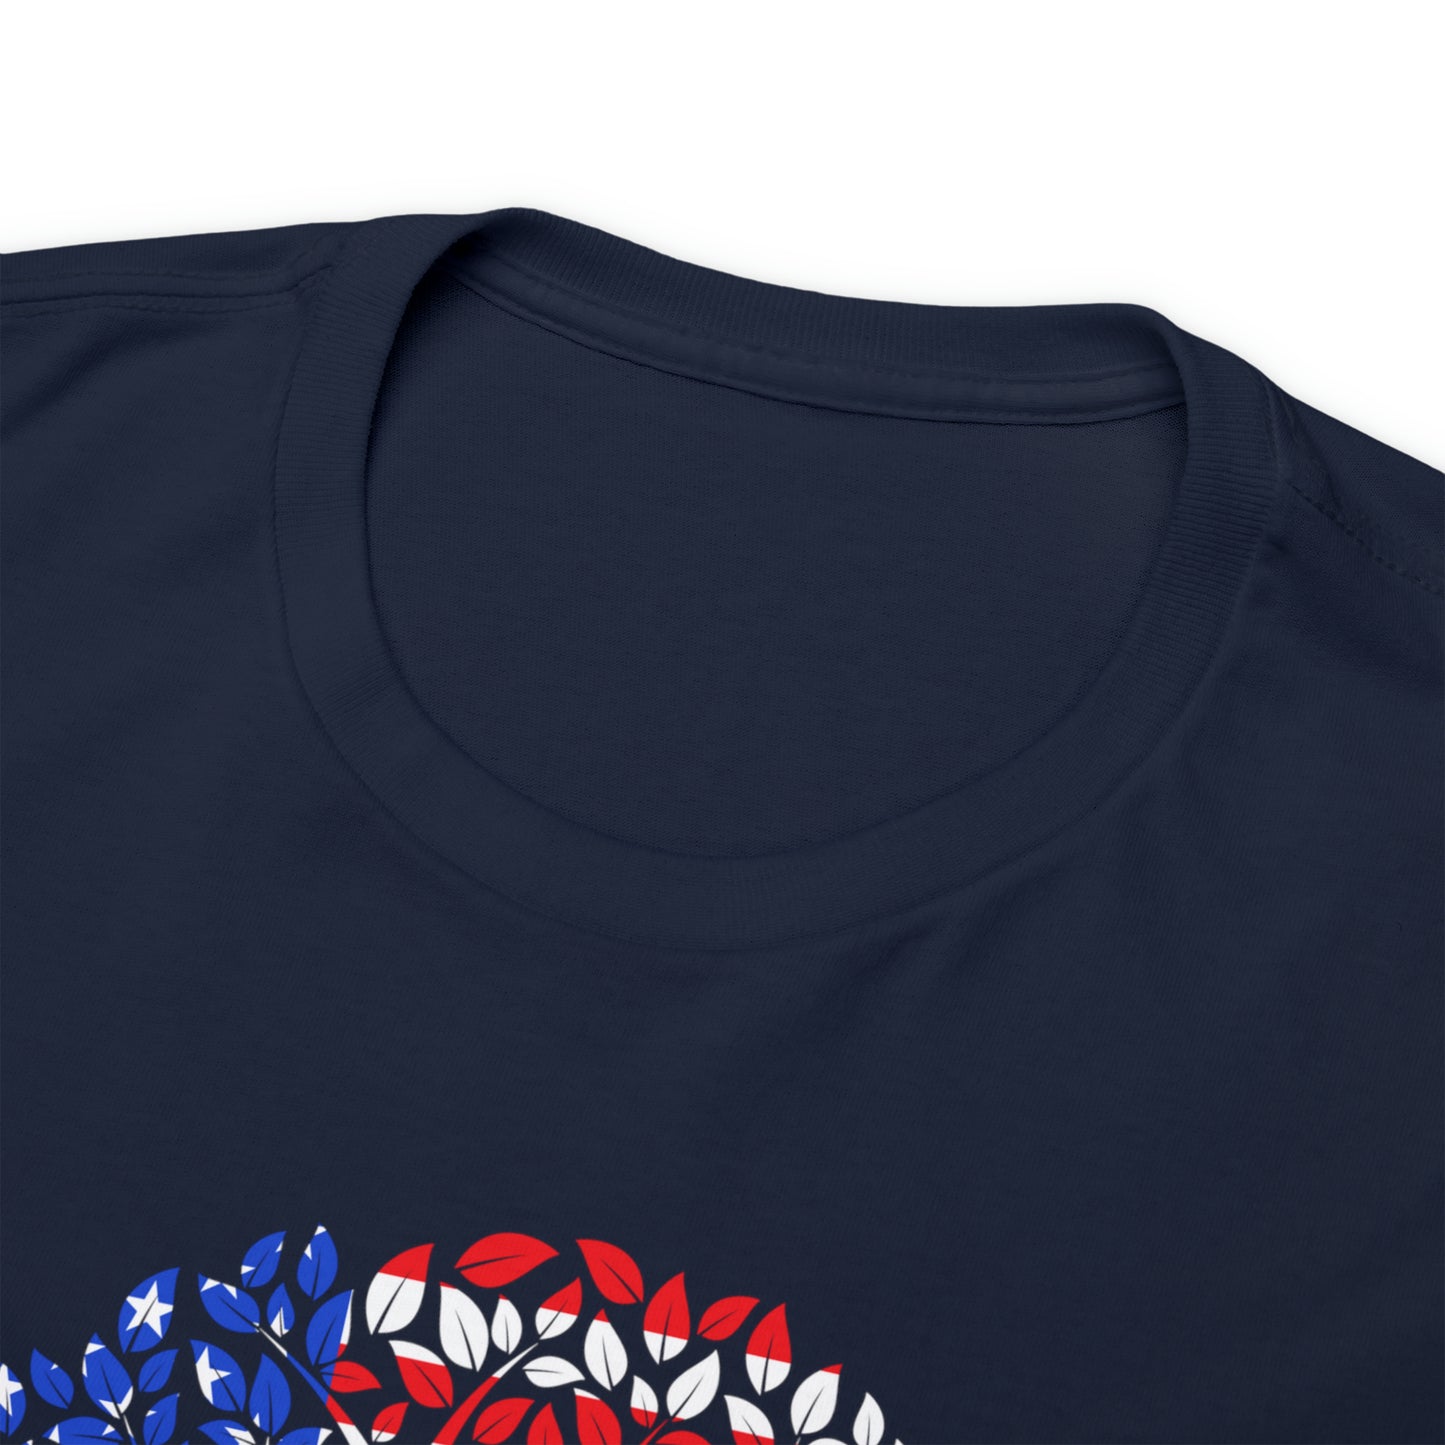 Puerto Rican Roots Design 3: Unisex T-Shirt